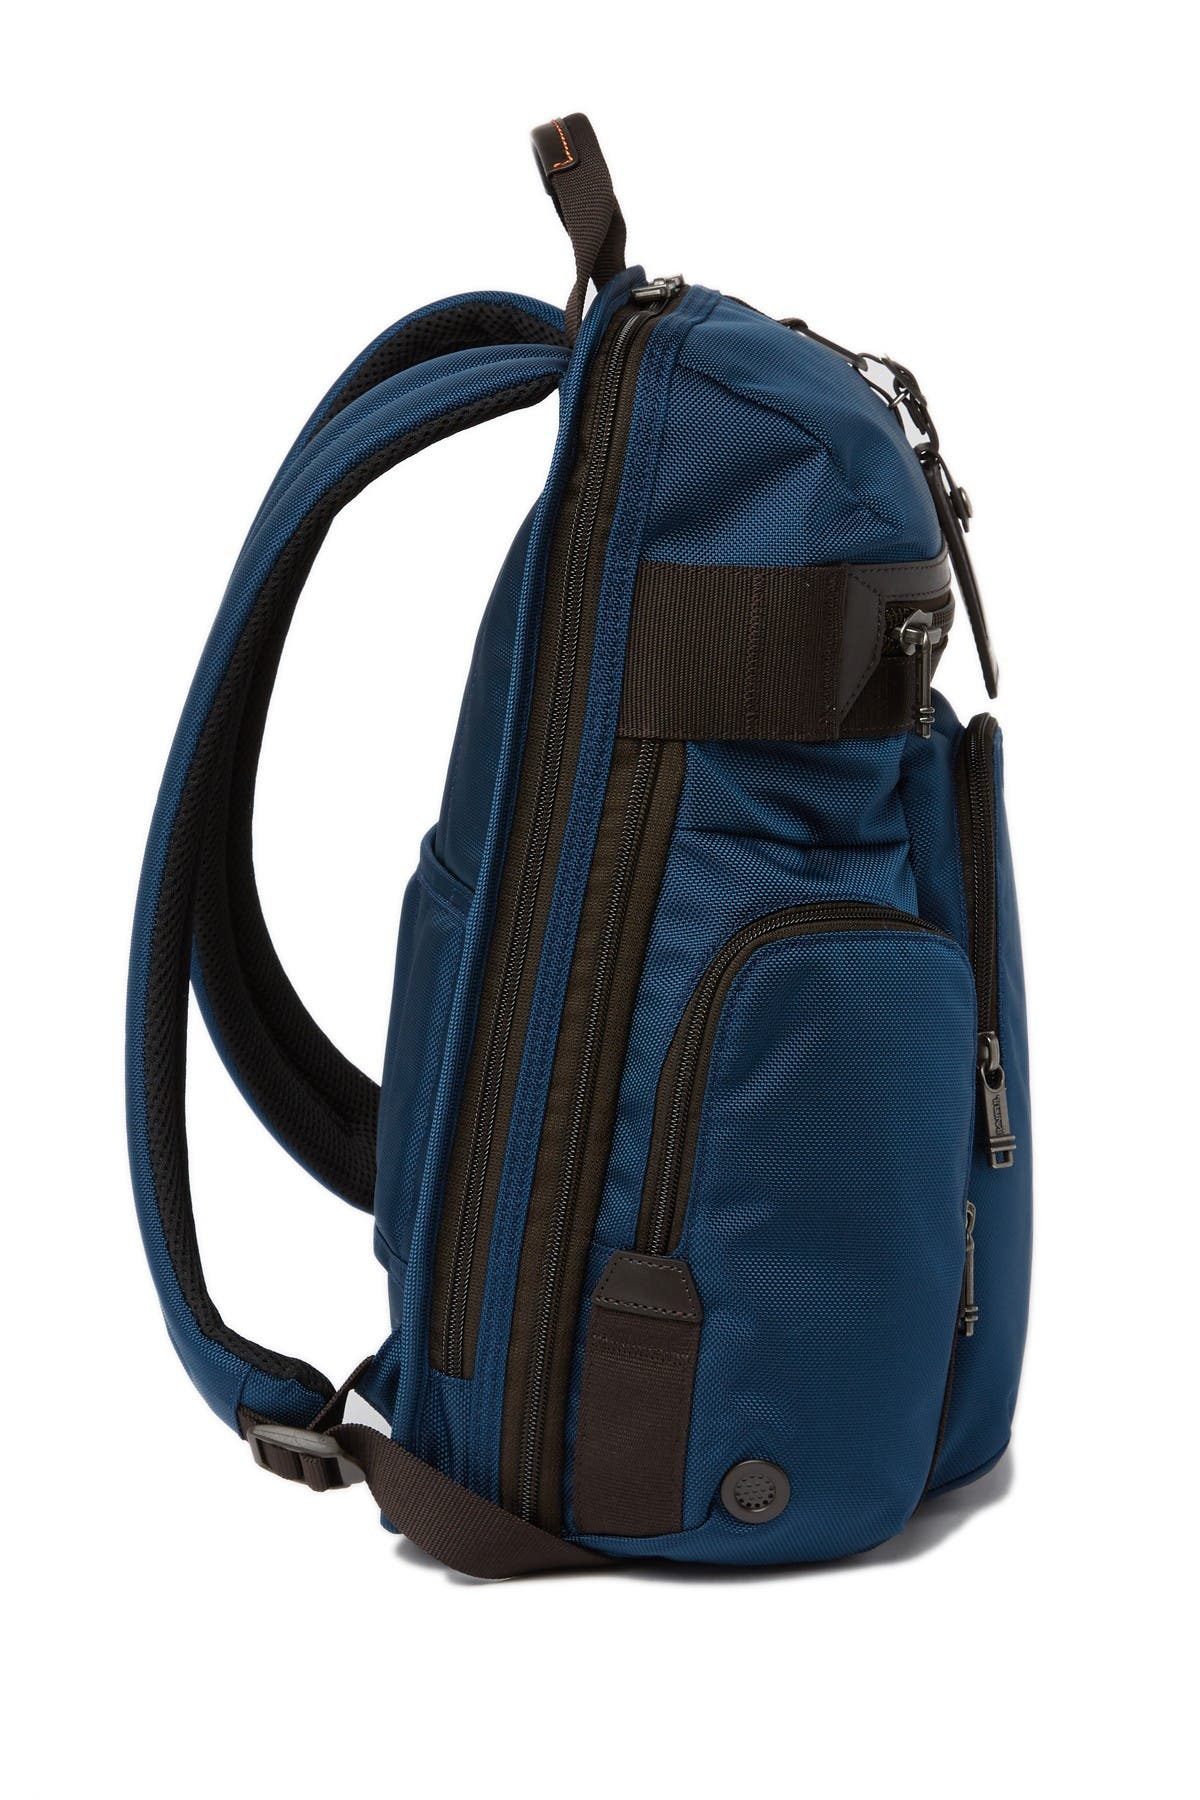 Tumi Nickerrson 3 Pocket Expansion Backpack In Dark Blue